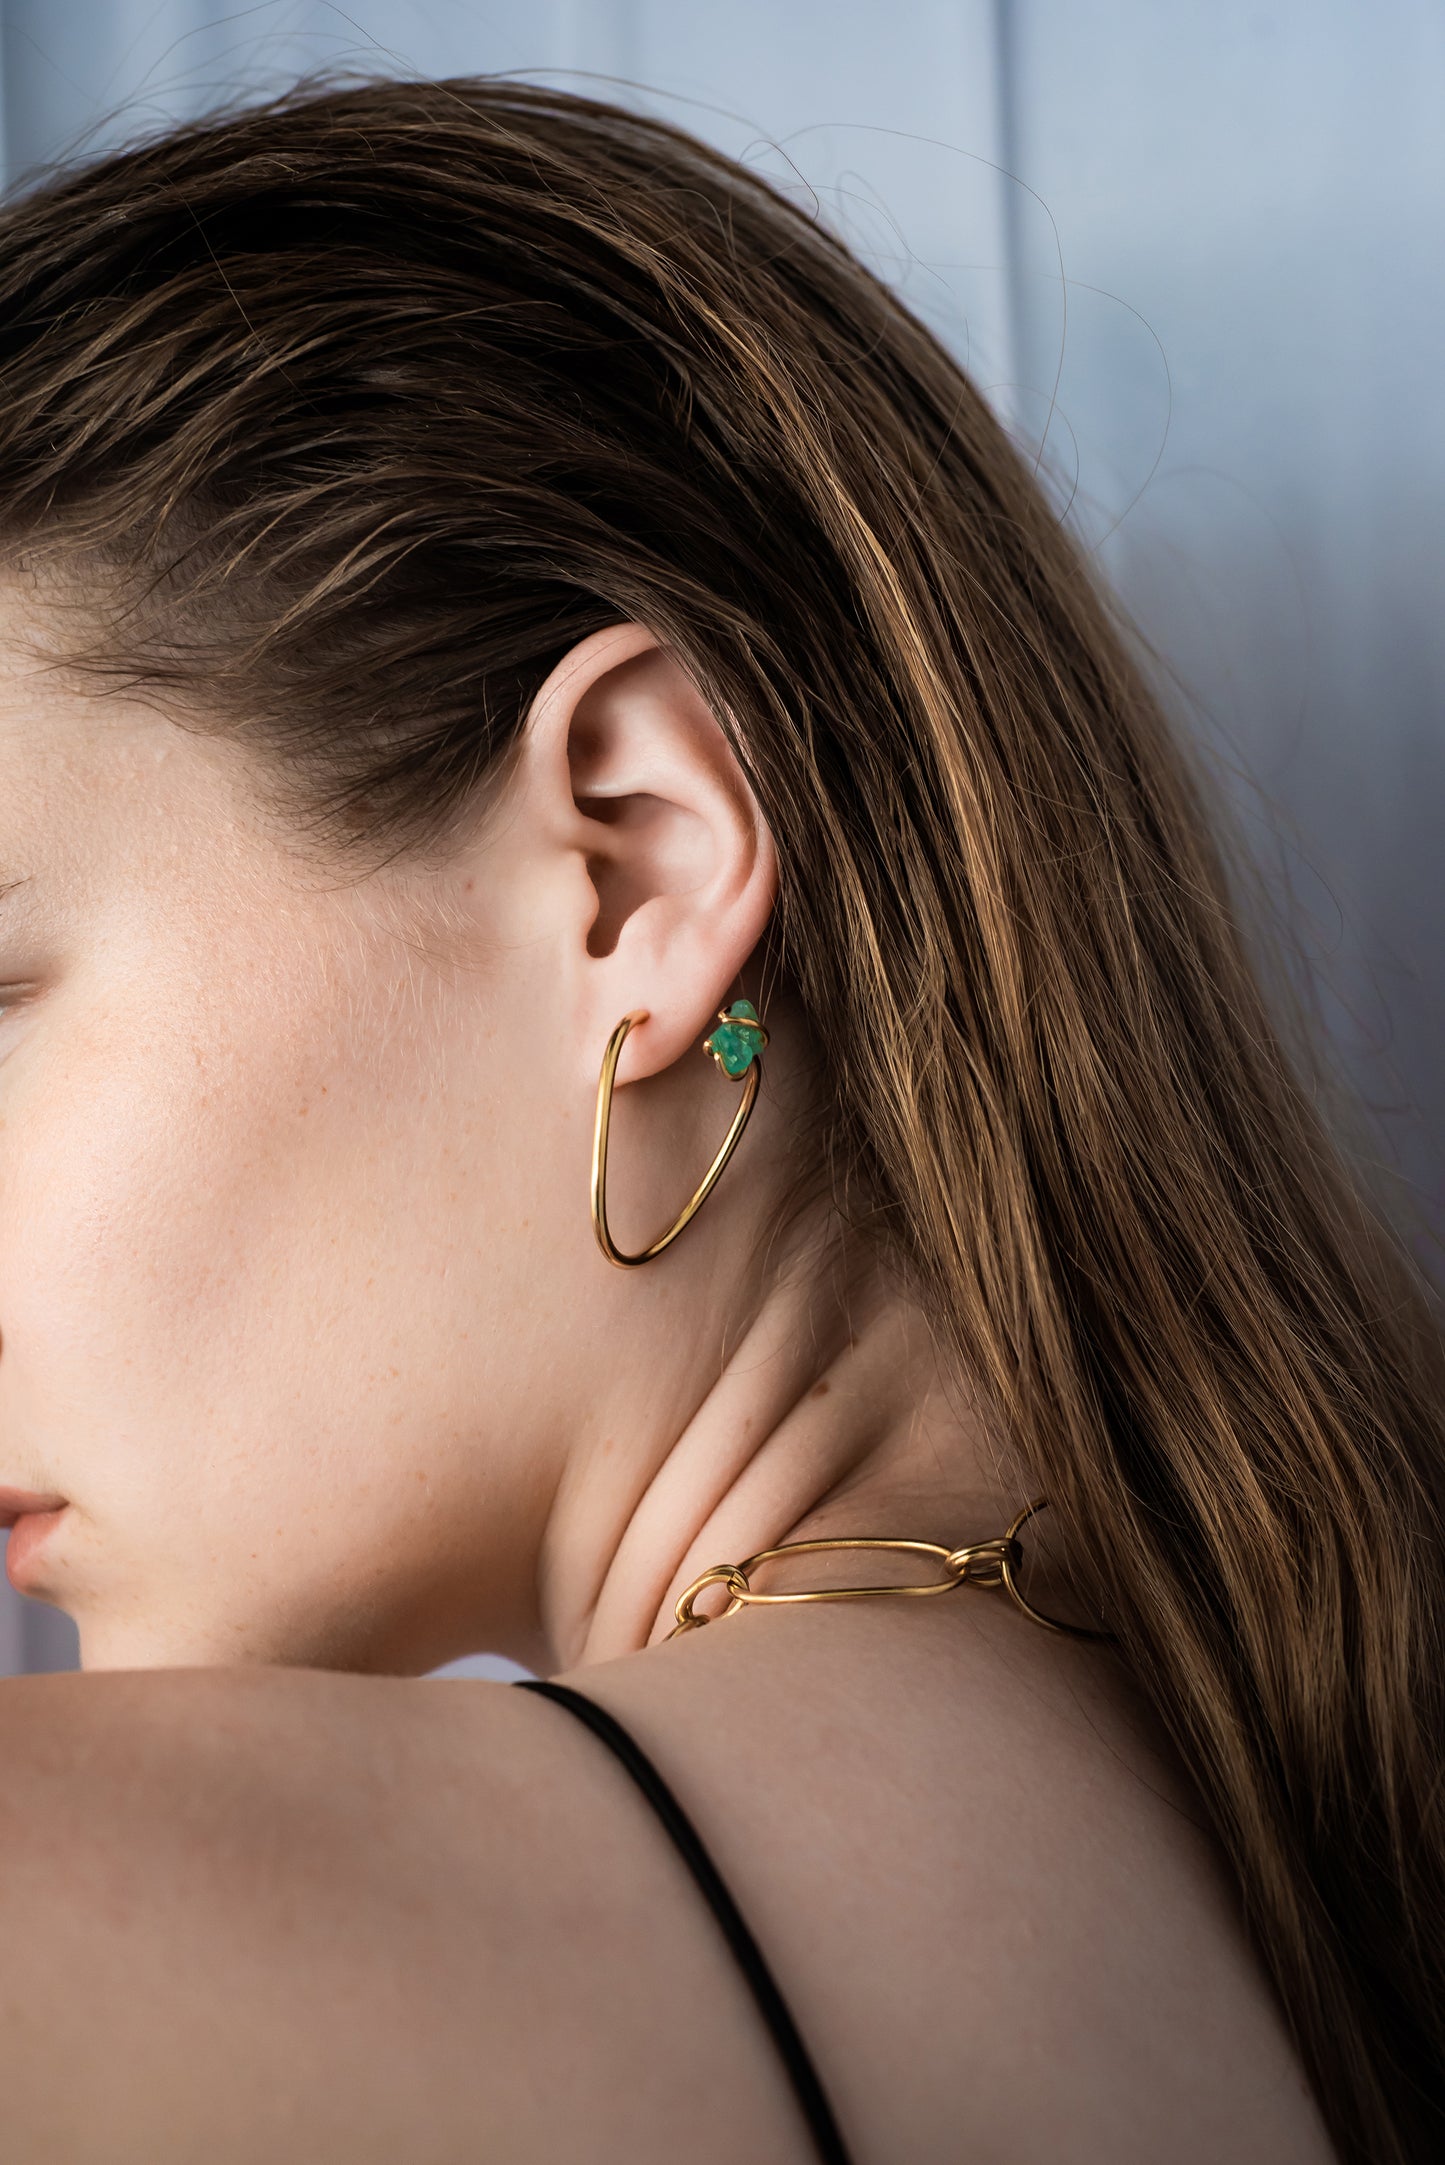 Twisted Romana earrings